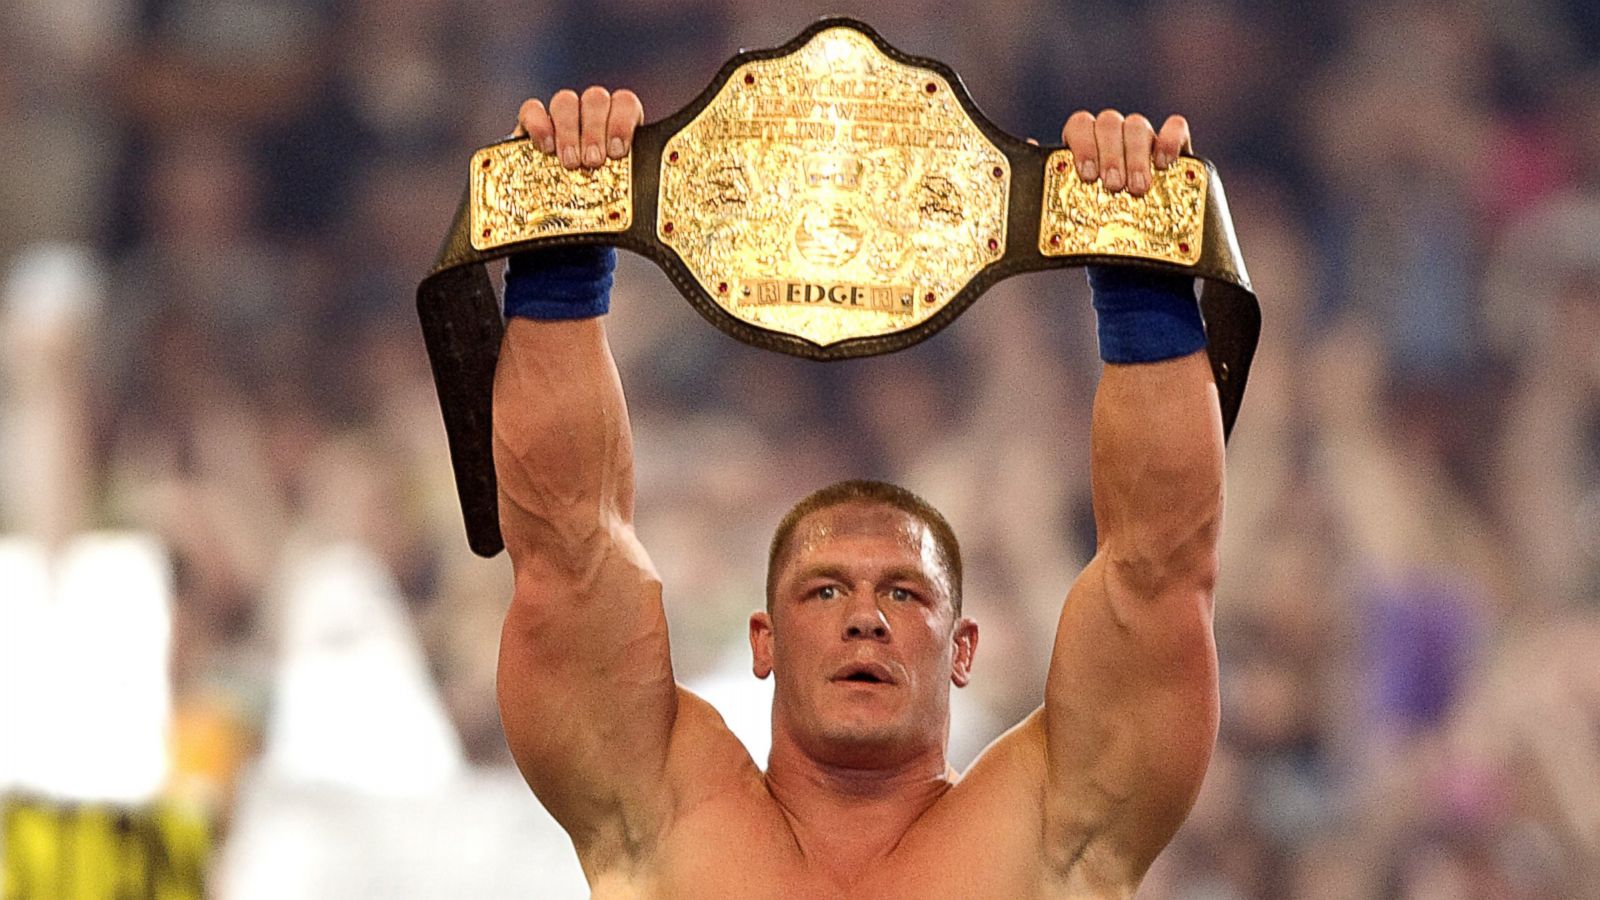 John Cena Wins 16th World Championship, Ties All-Time Record - ABC News